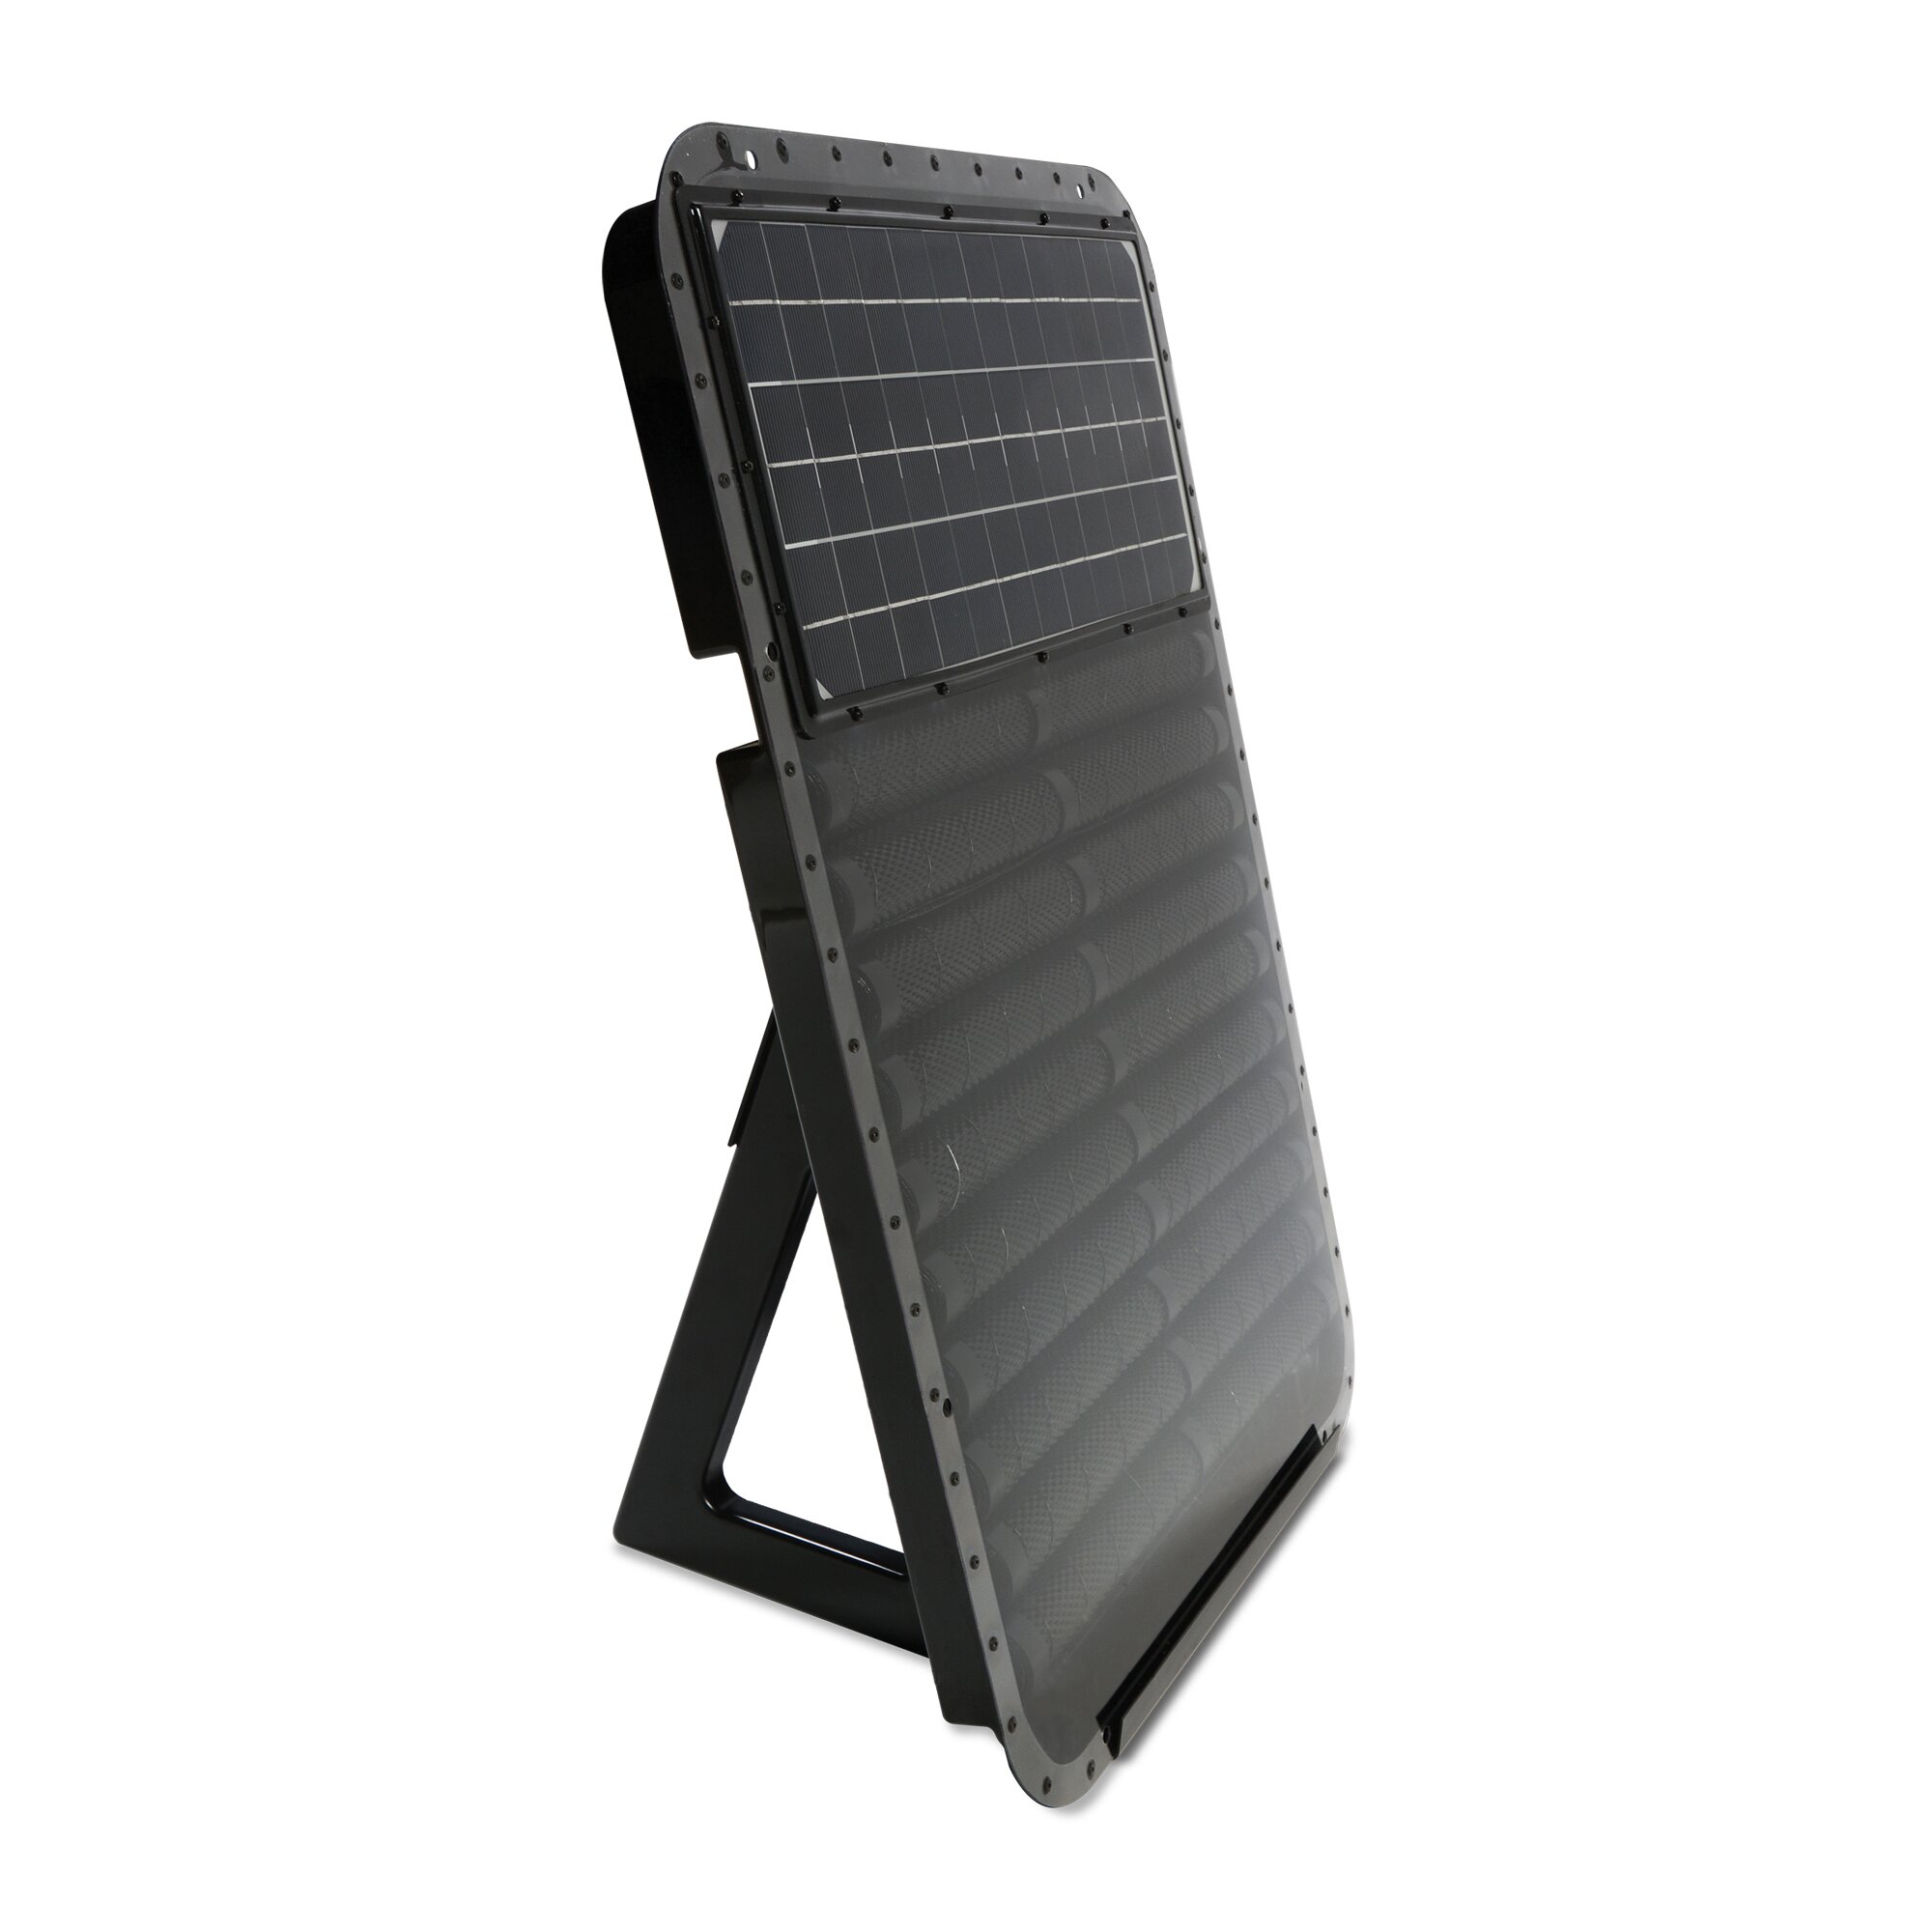 SolarInfra Systems The Sun 800 BTU Wall Mounted Solar Forced Air Panel Heater & Reviews Wayfair